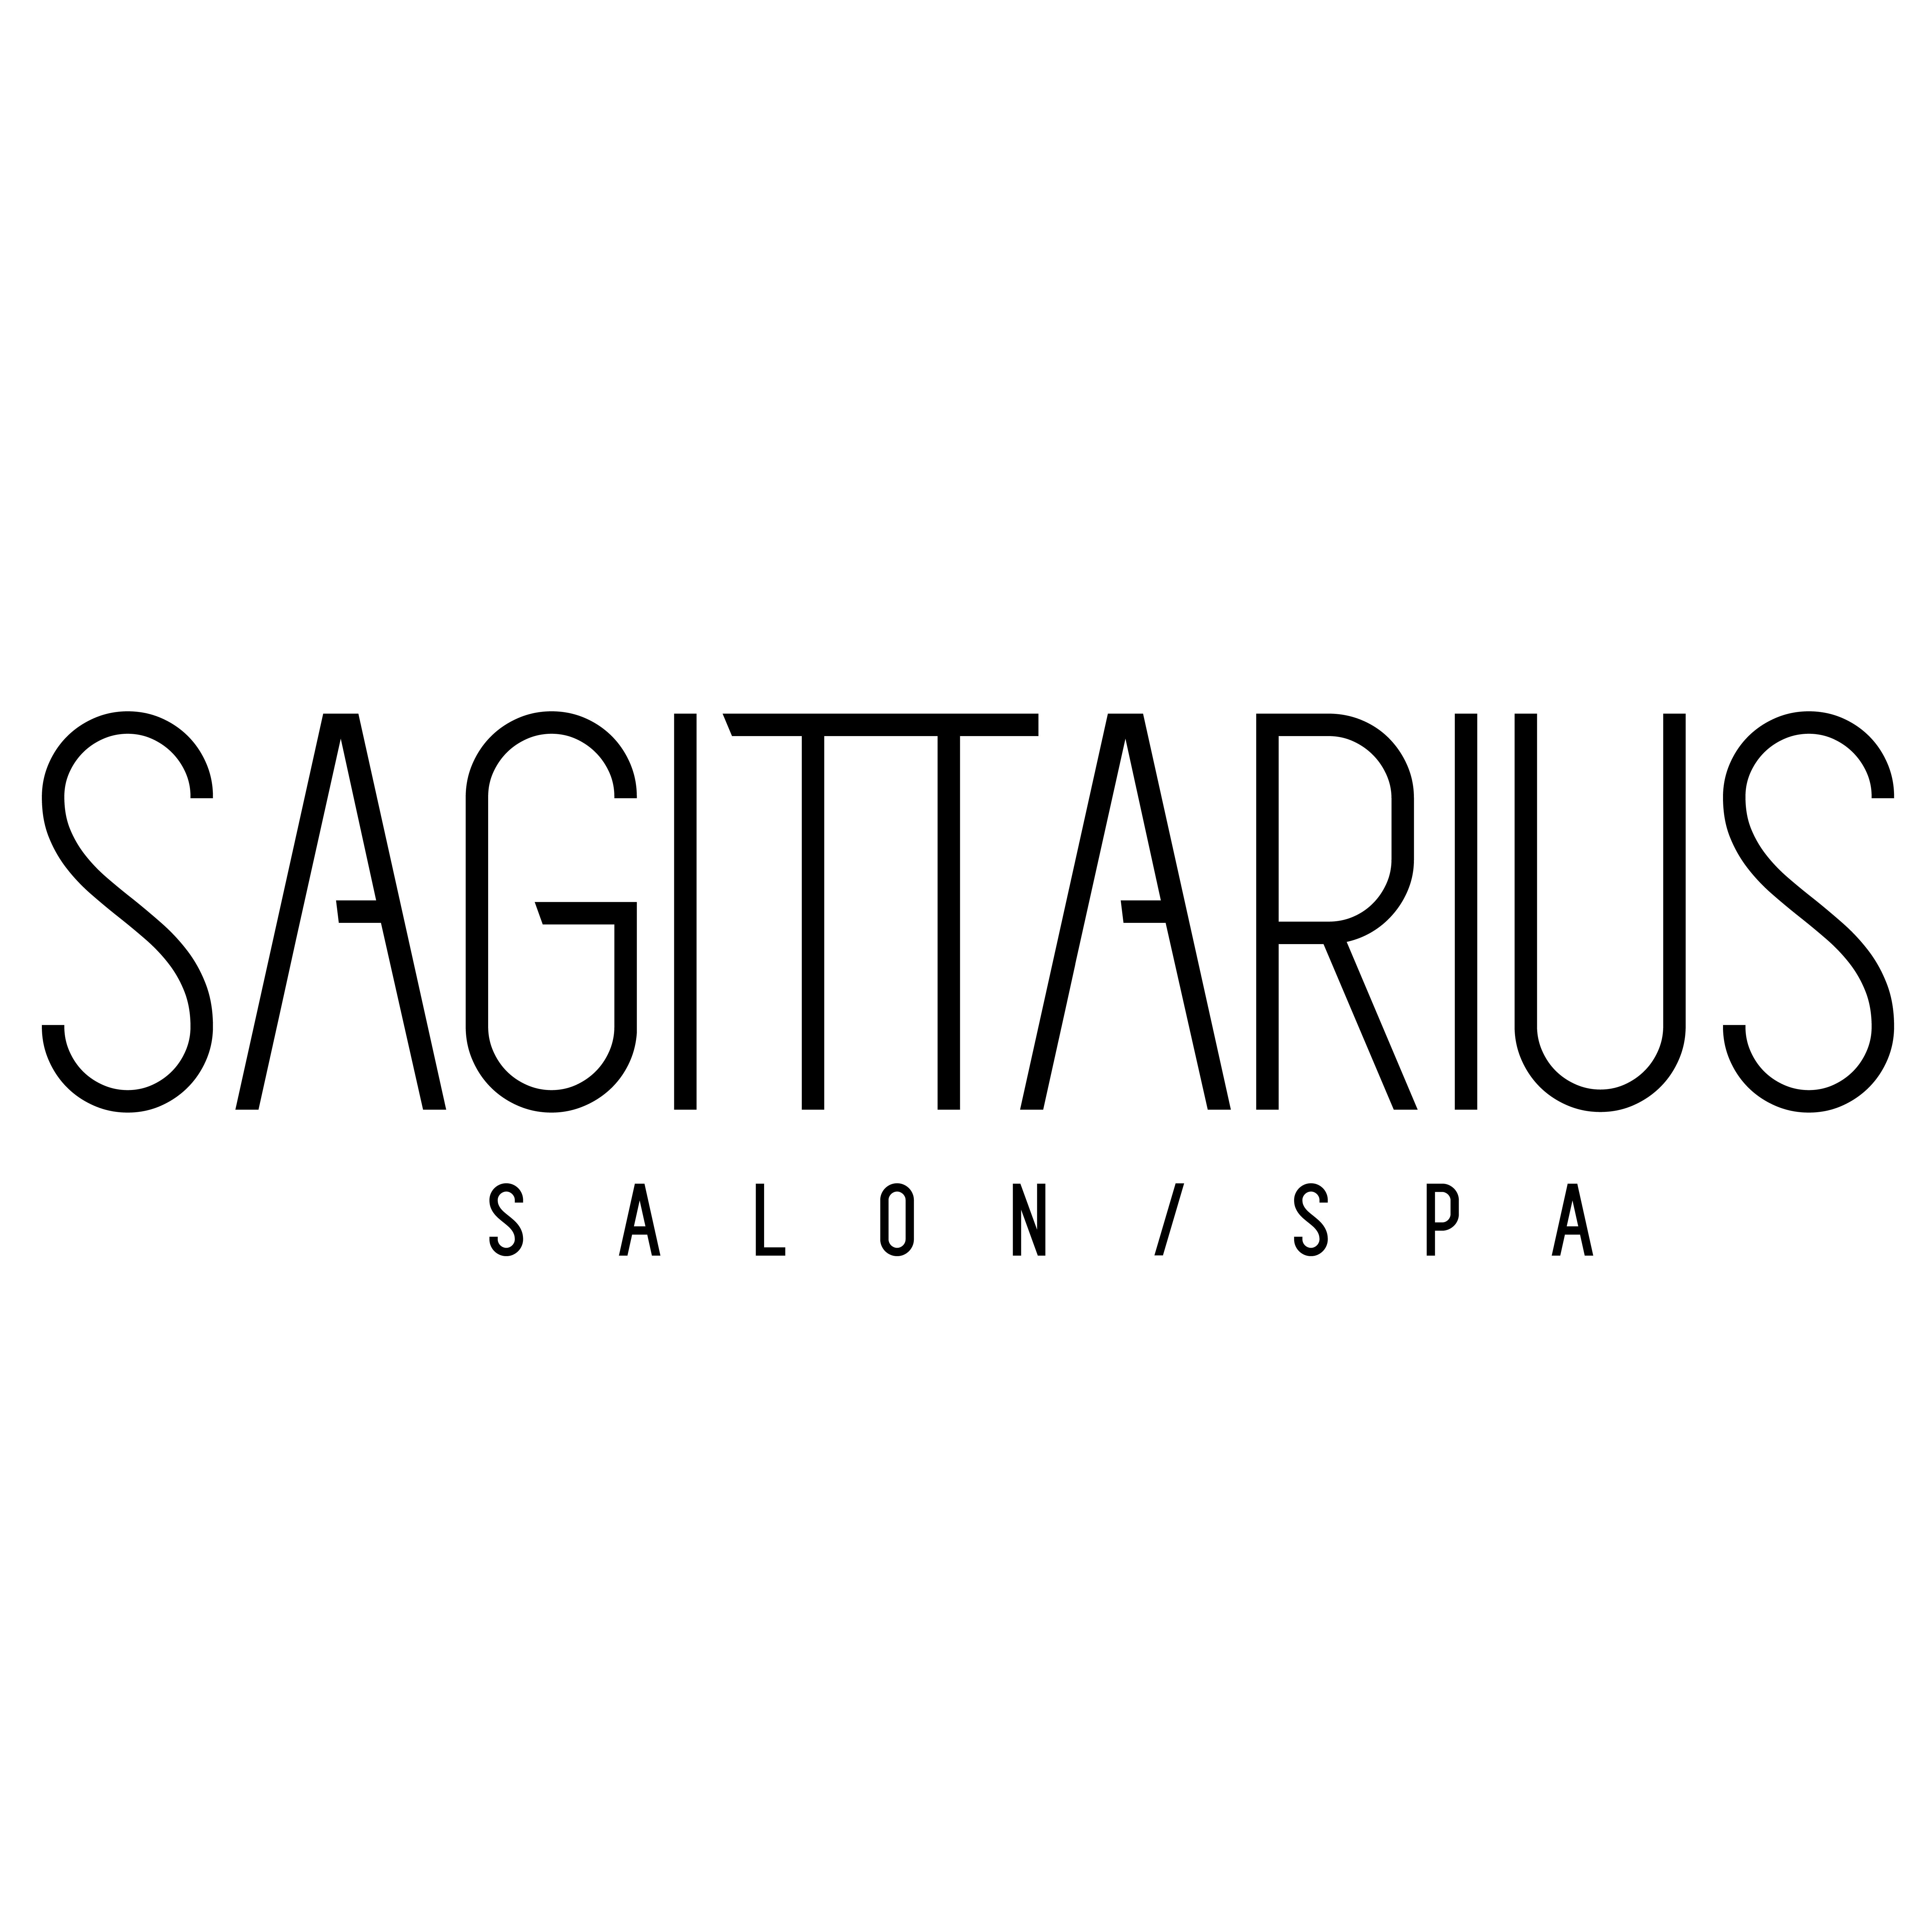 Sagittarius Salon & Spa - Hagerstown, MD 21740 - (301)797-8008 | ShowMeLocal.com